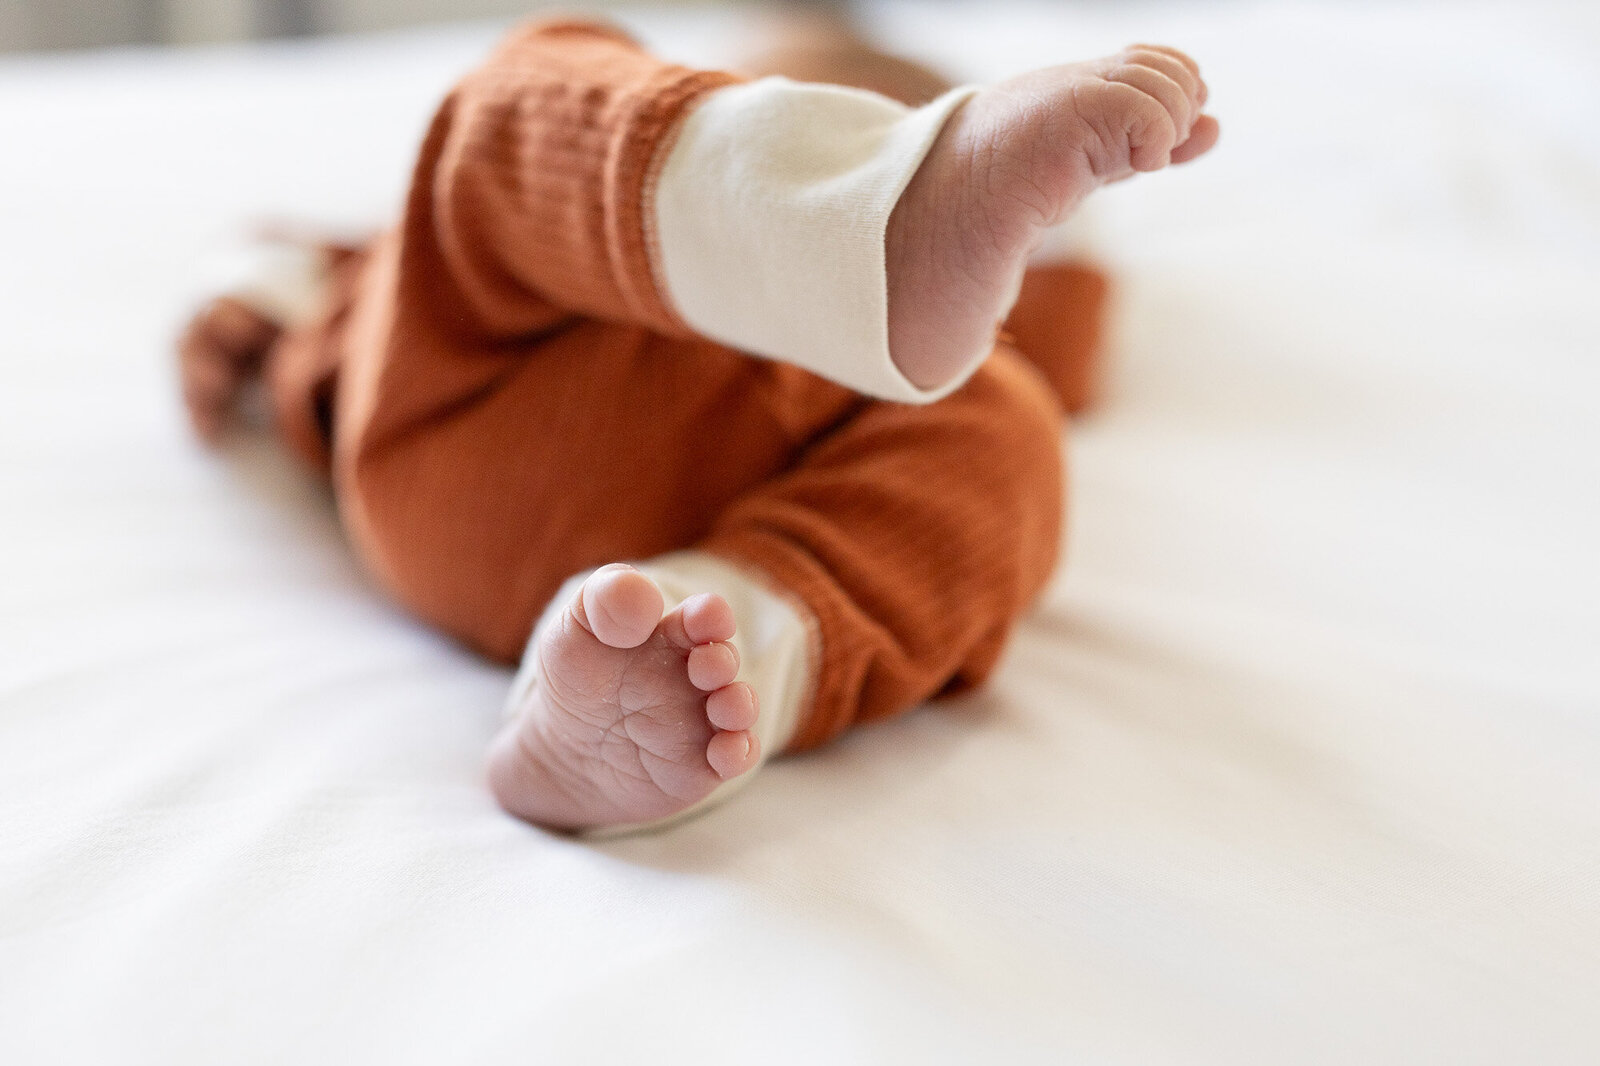 Newborn babies feet on white bedding.